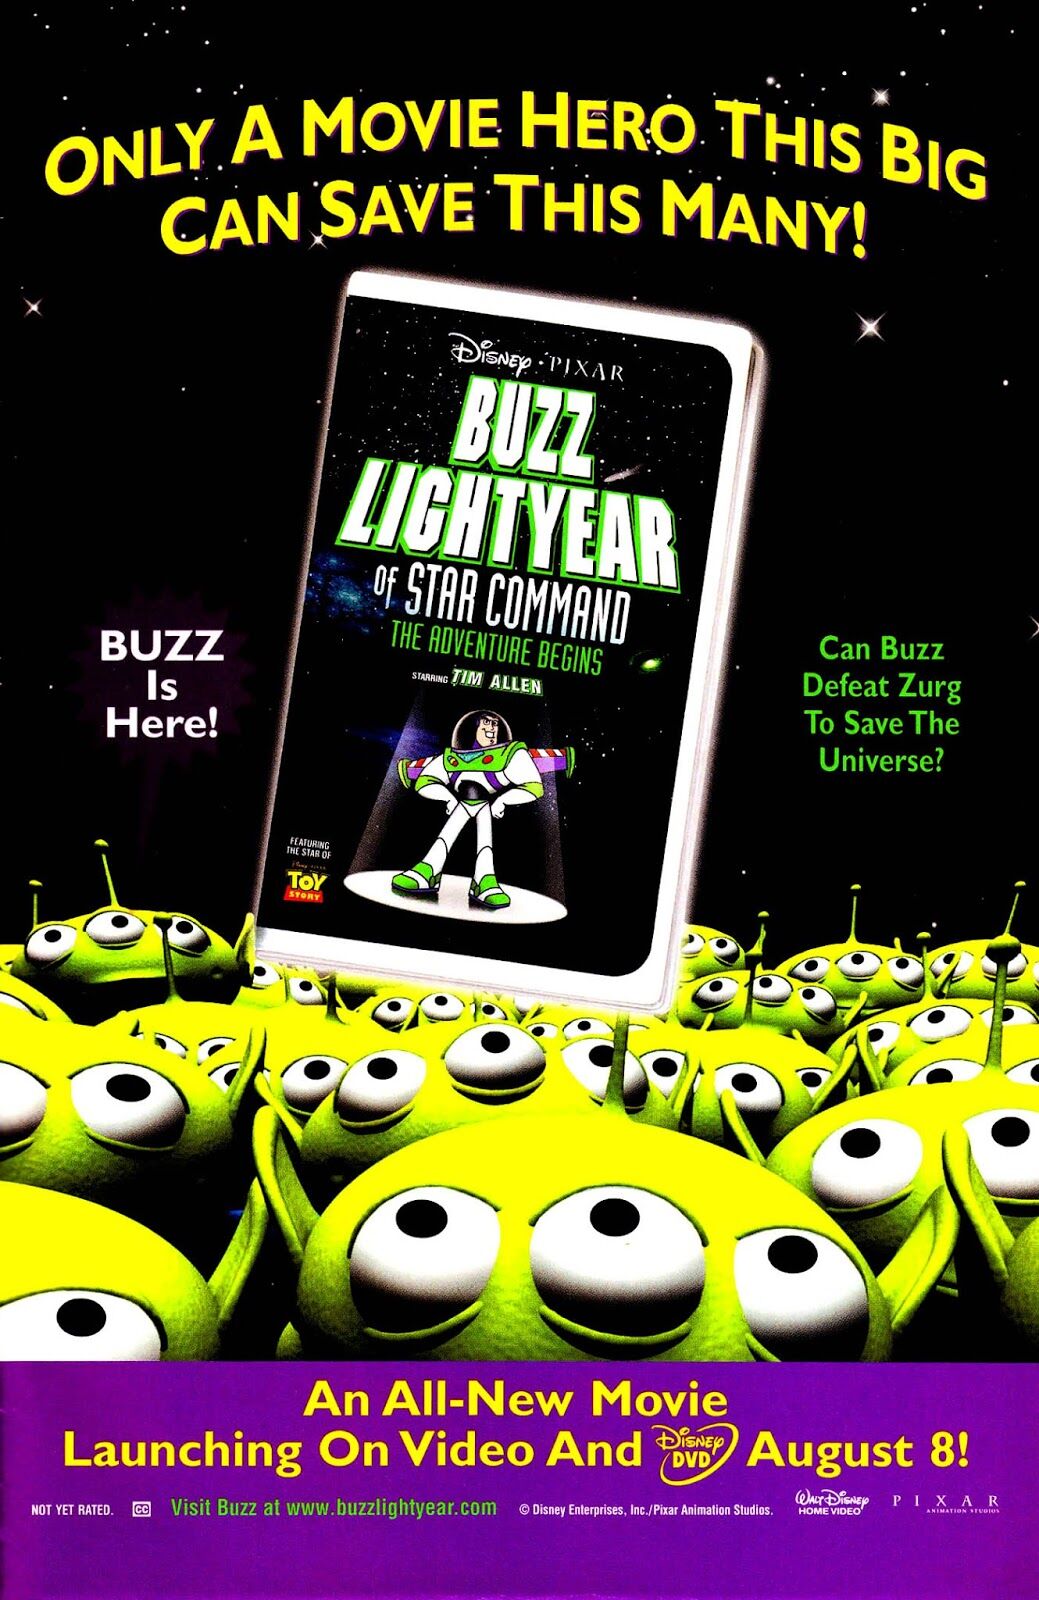 buzz lightyear of star command the adventure begins dvd